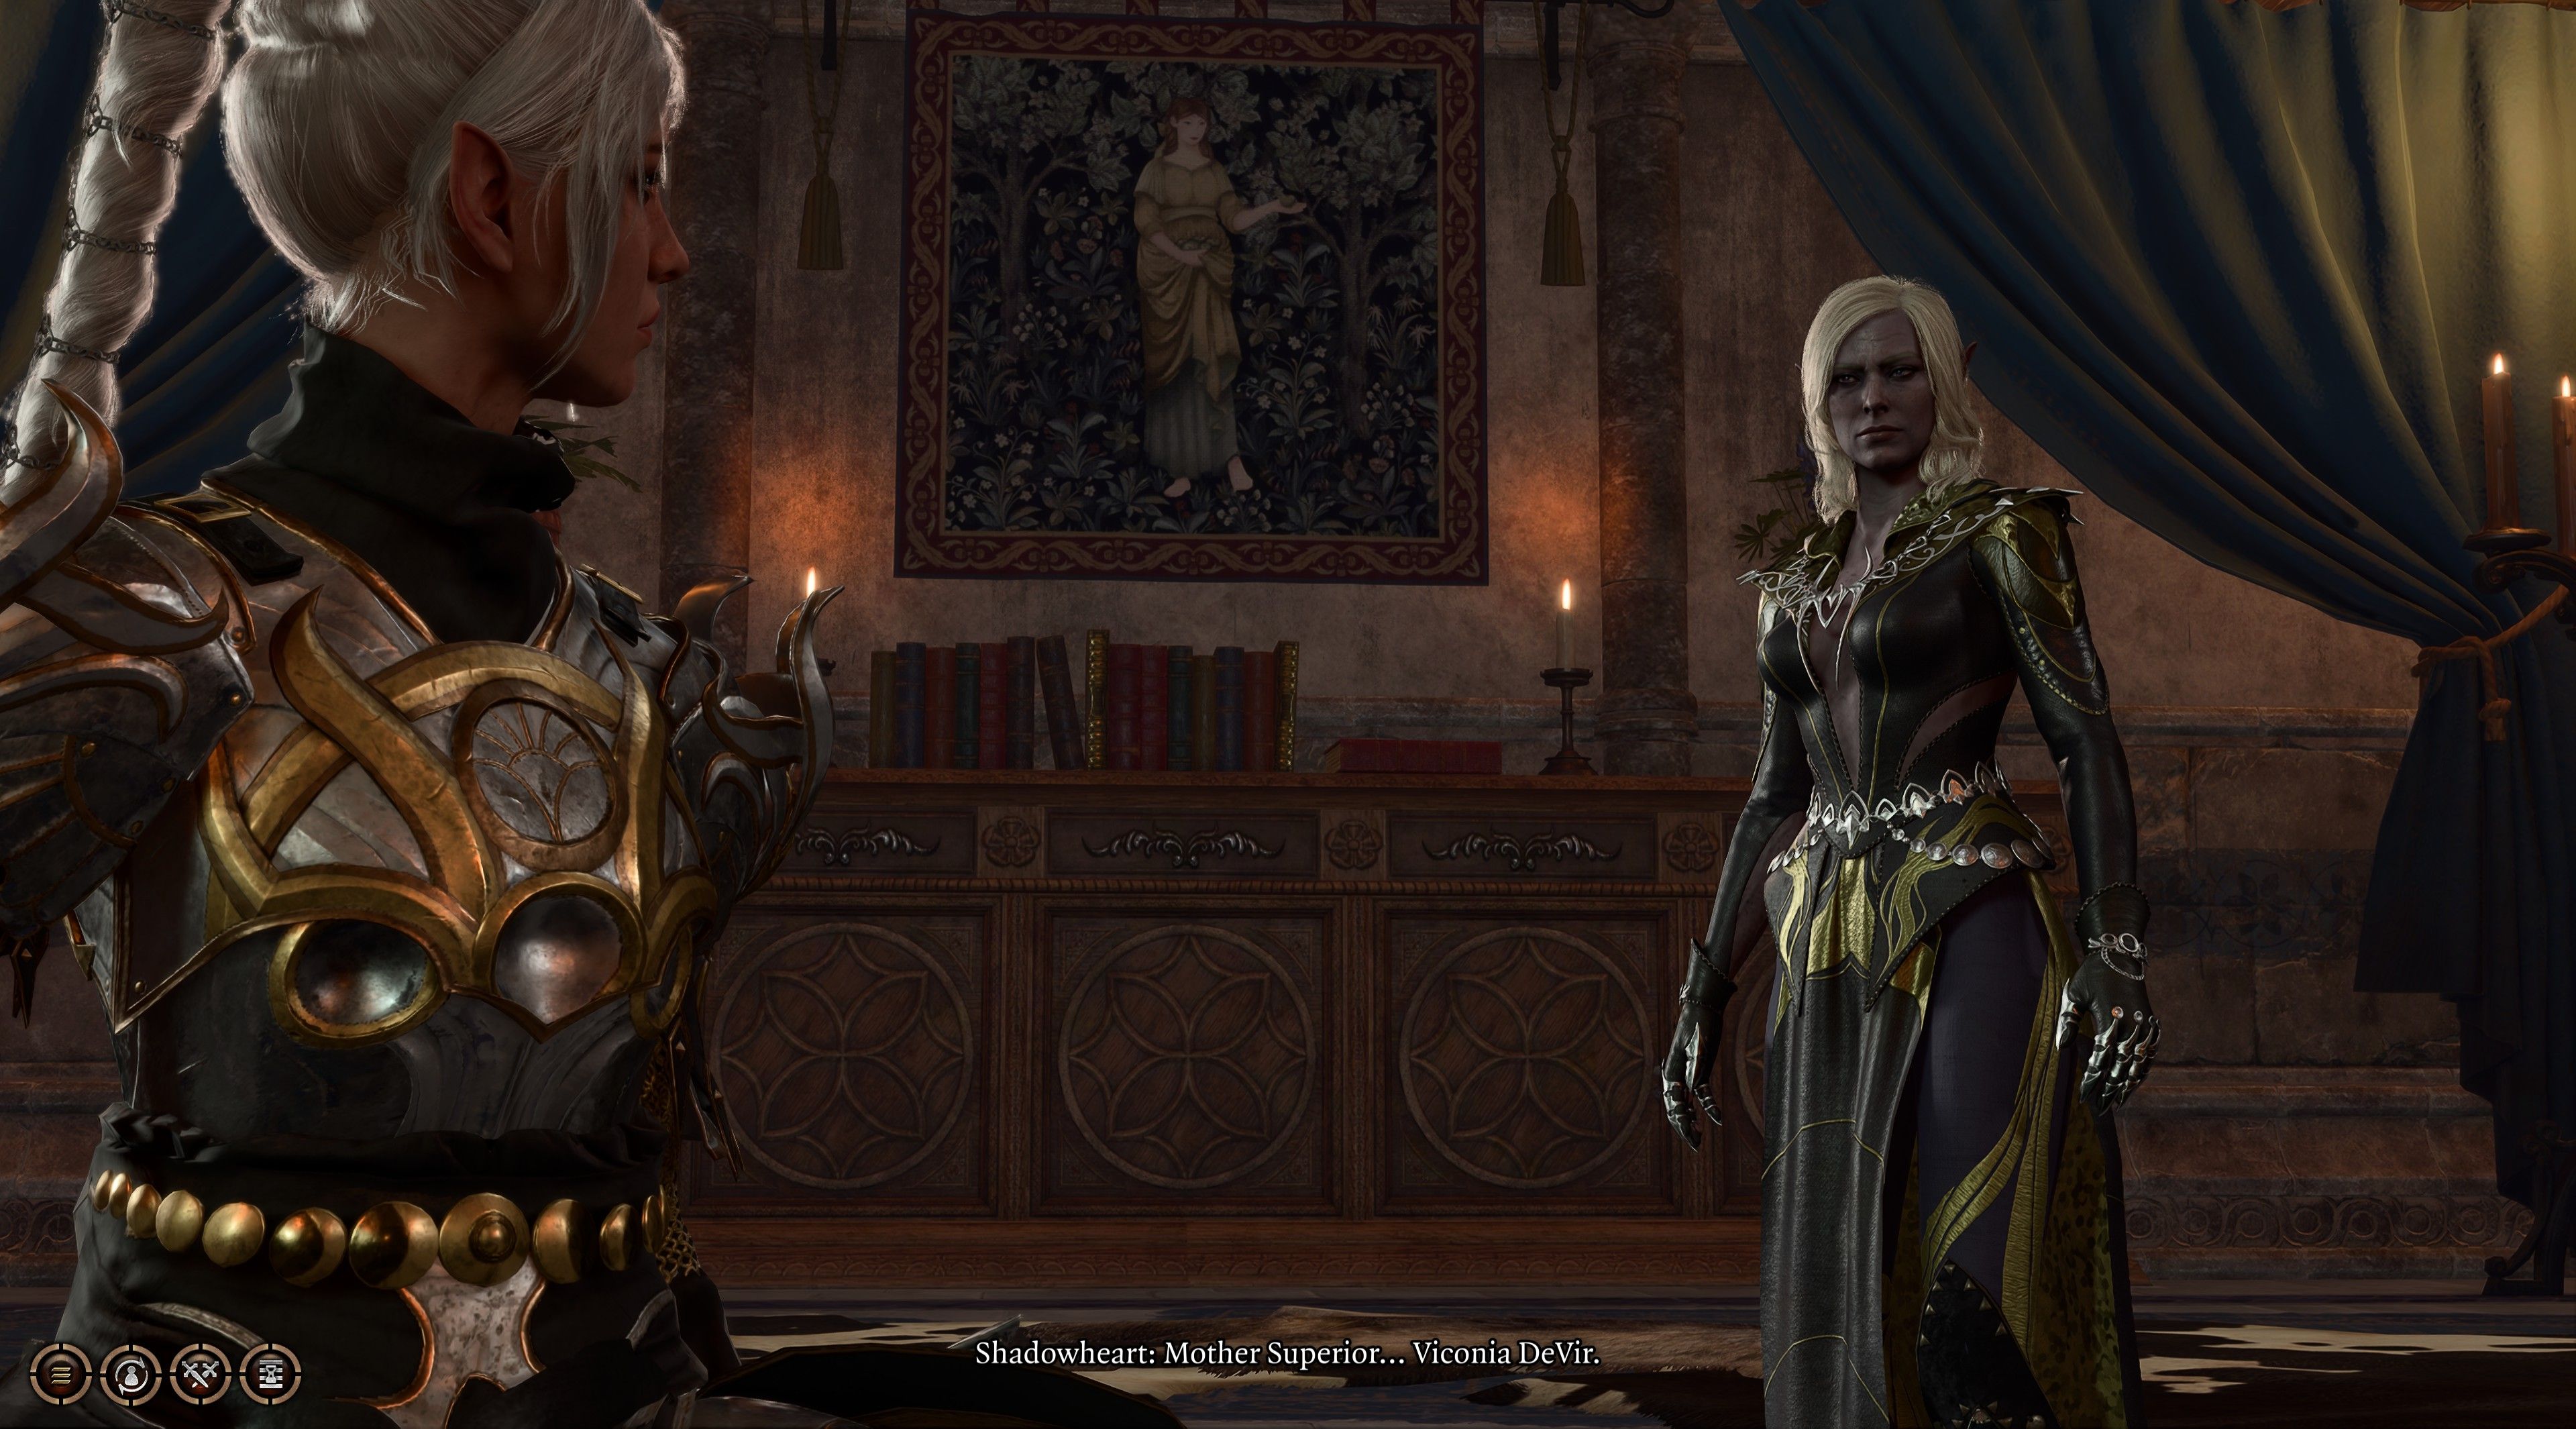 Baldur's Gate 3 Shadowheart konfrontiert Viconia deVir in House Of Grief